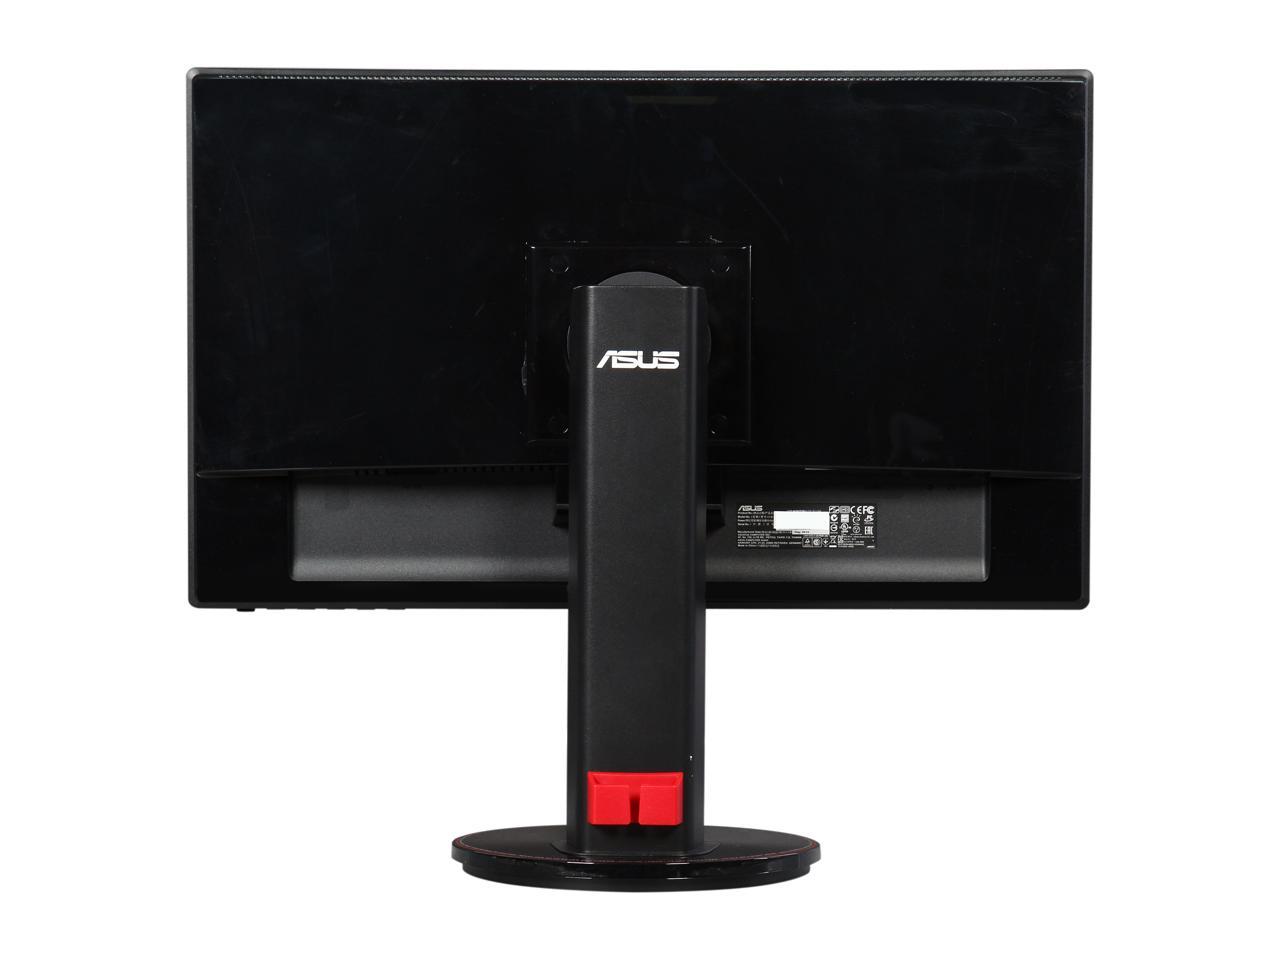 Asus VG248QE 24" Full HD 1920x1080 144Hz Gaming Monitor - Newegg.com